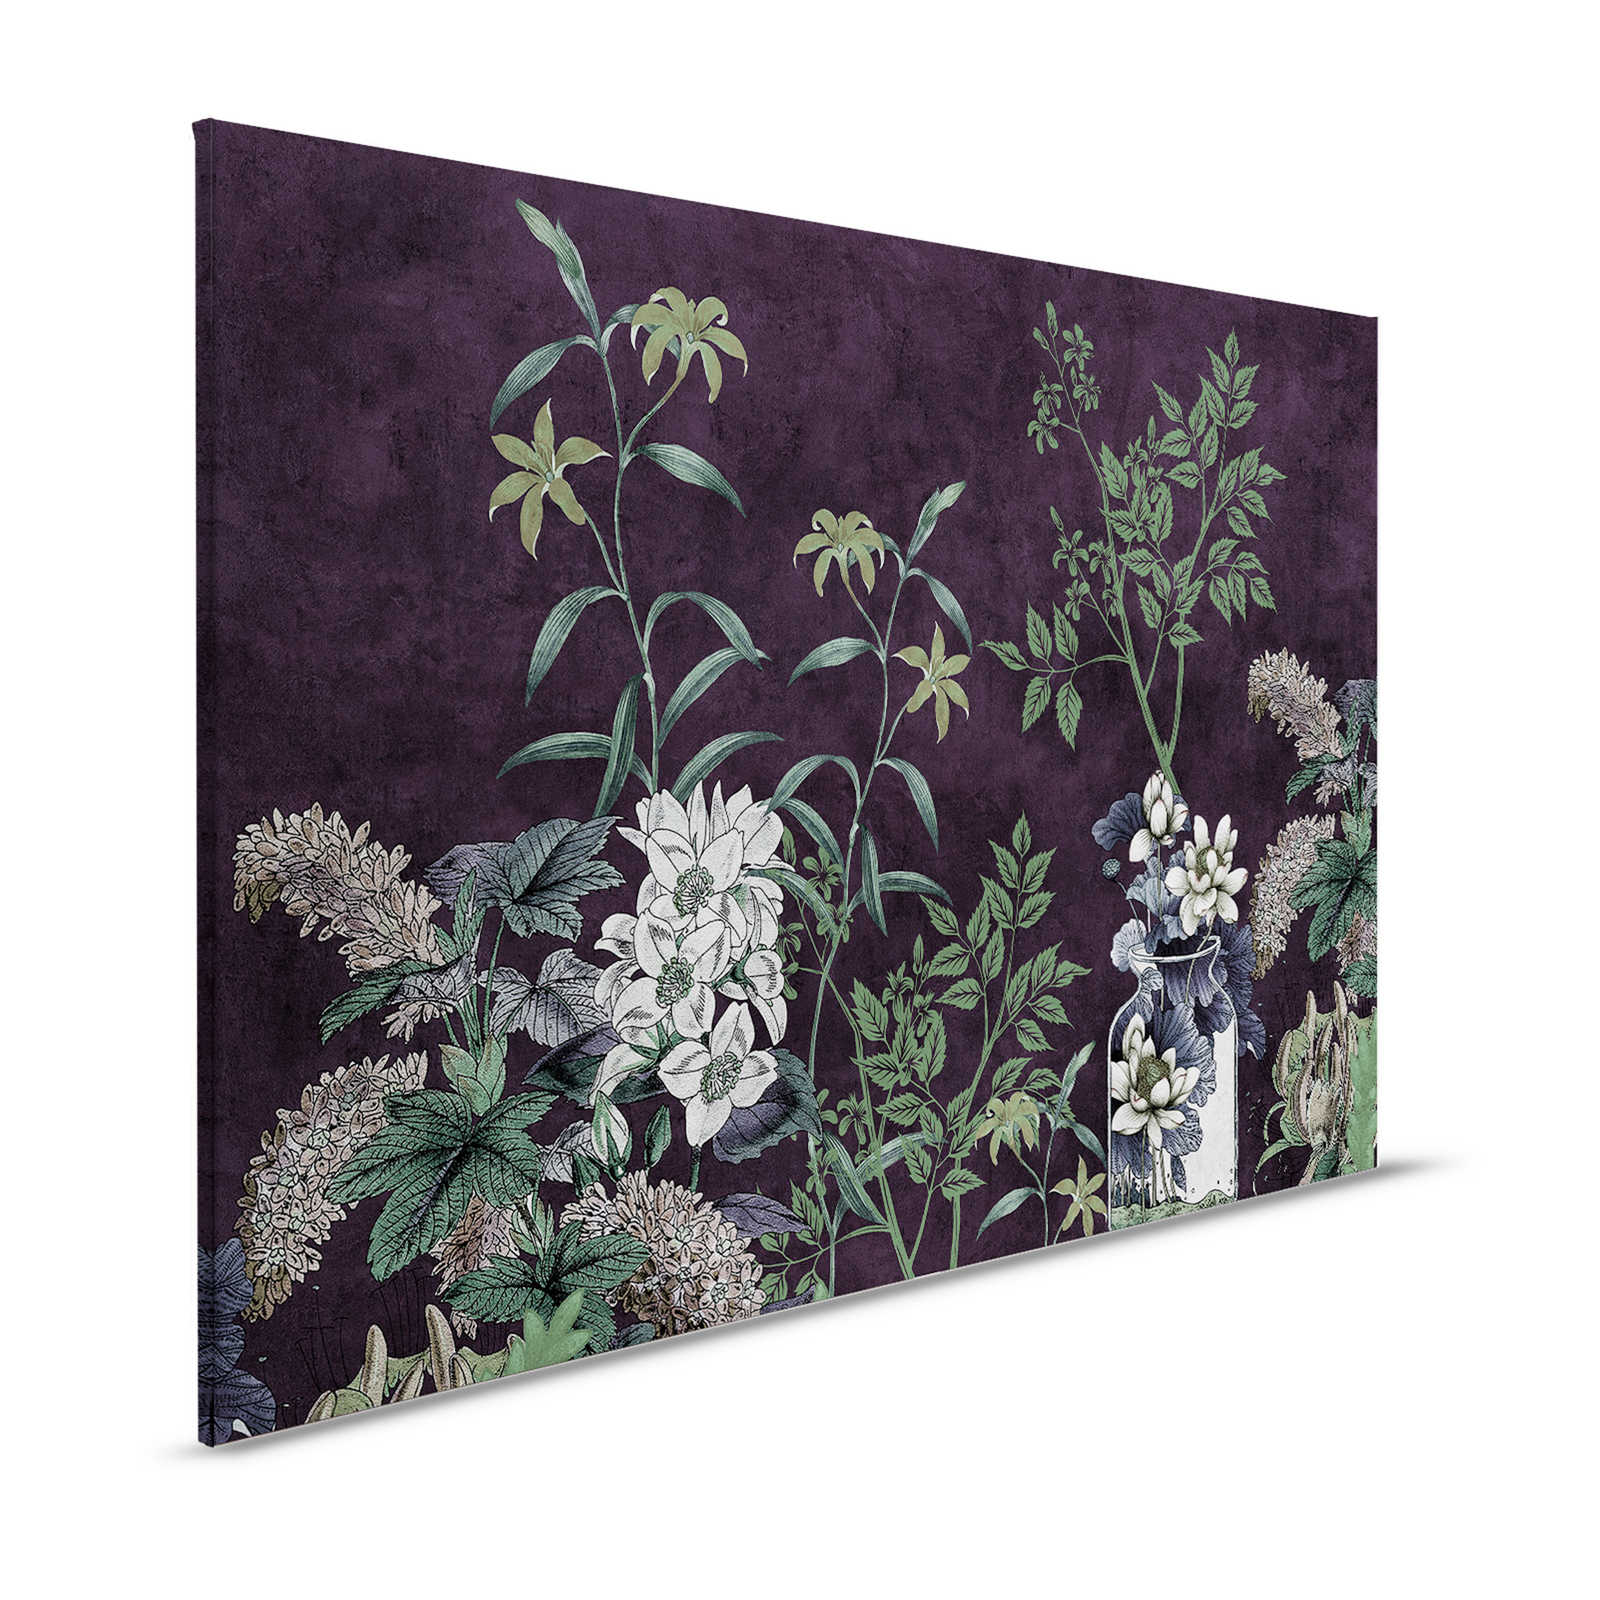 Dark Room 1 - Black Canvas Painting Botanical Pattern Green - 1.20 m x 0.80 m
